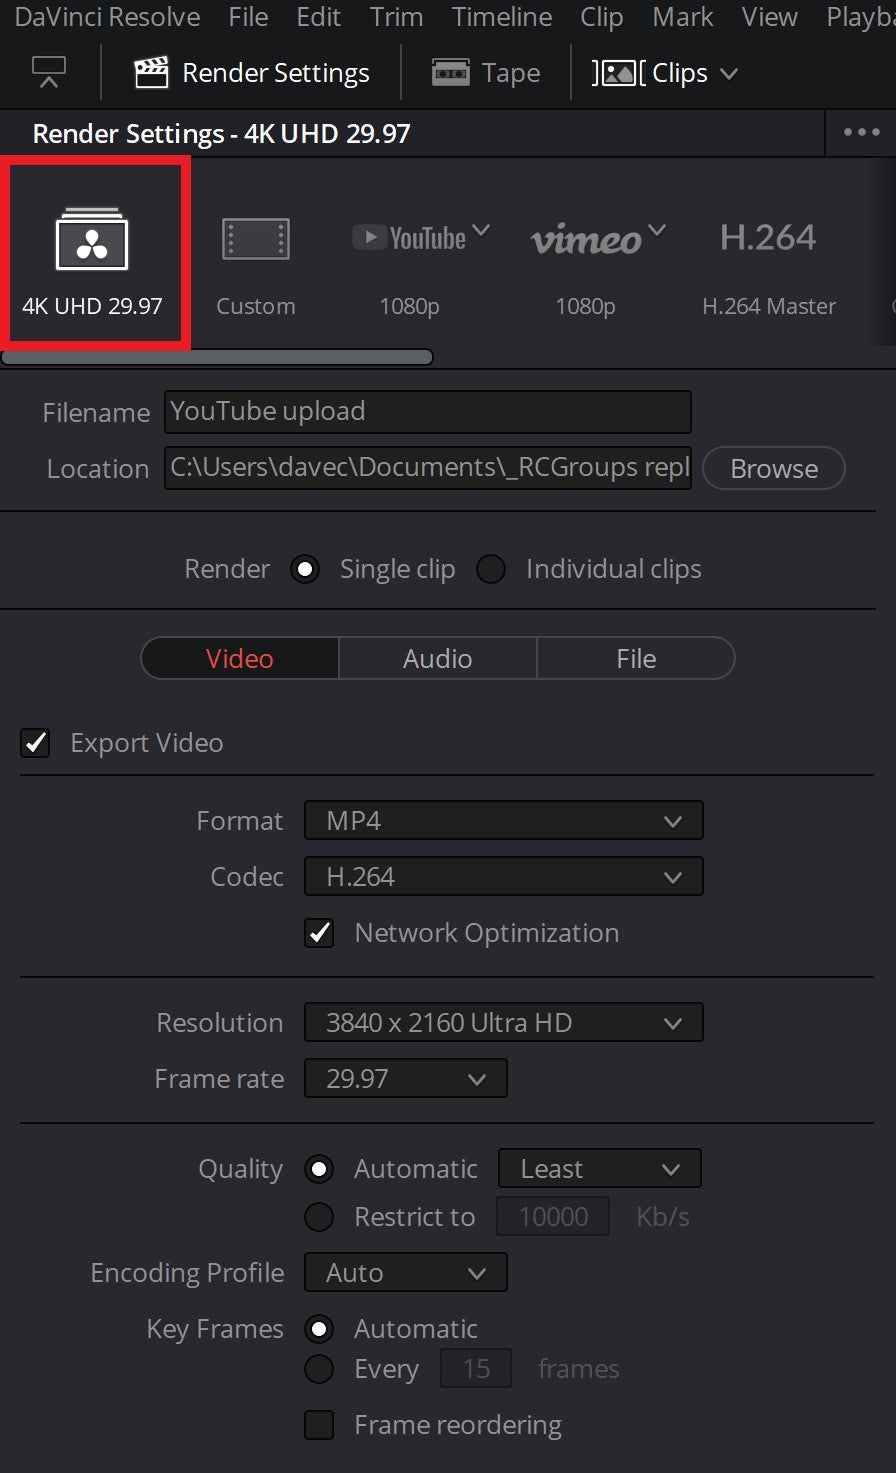 YouTube export settings for DaVinci Resolve A13692685-202-Custom%20export%20for%20YouTube%20in%20DaVinci%20Resolve%20-%20Render%20Preset%20final